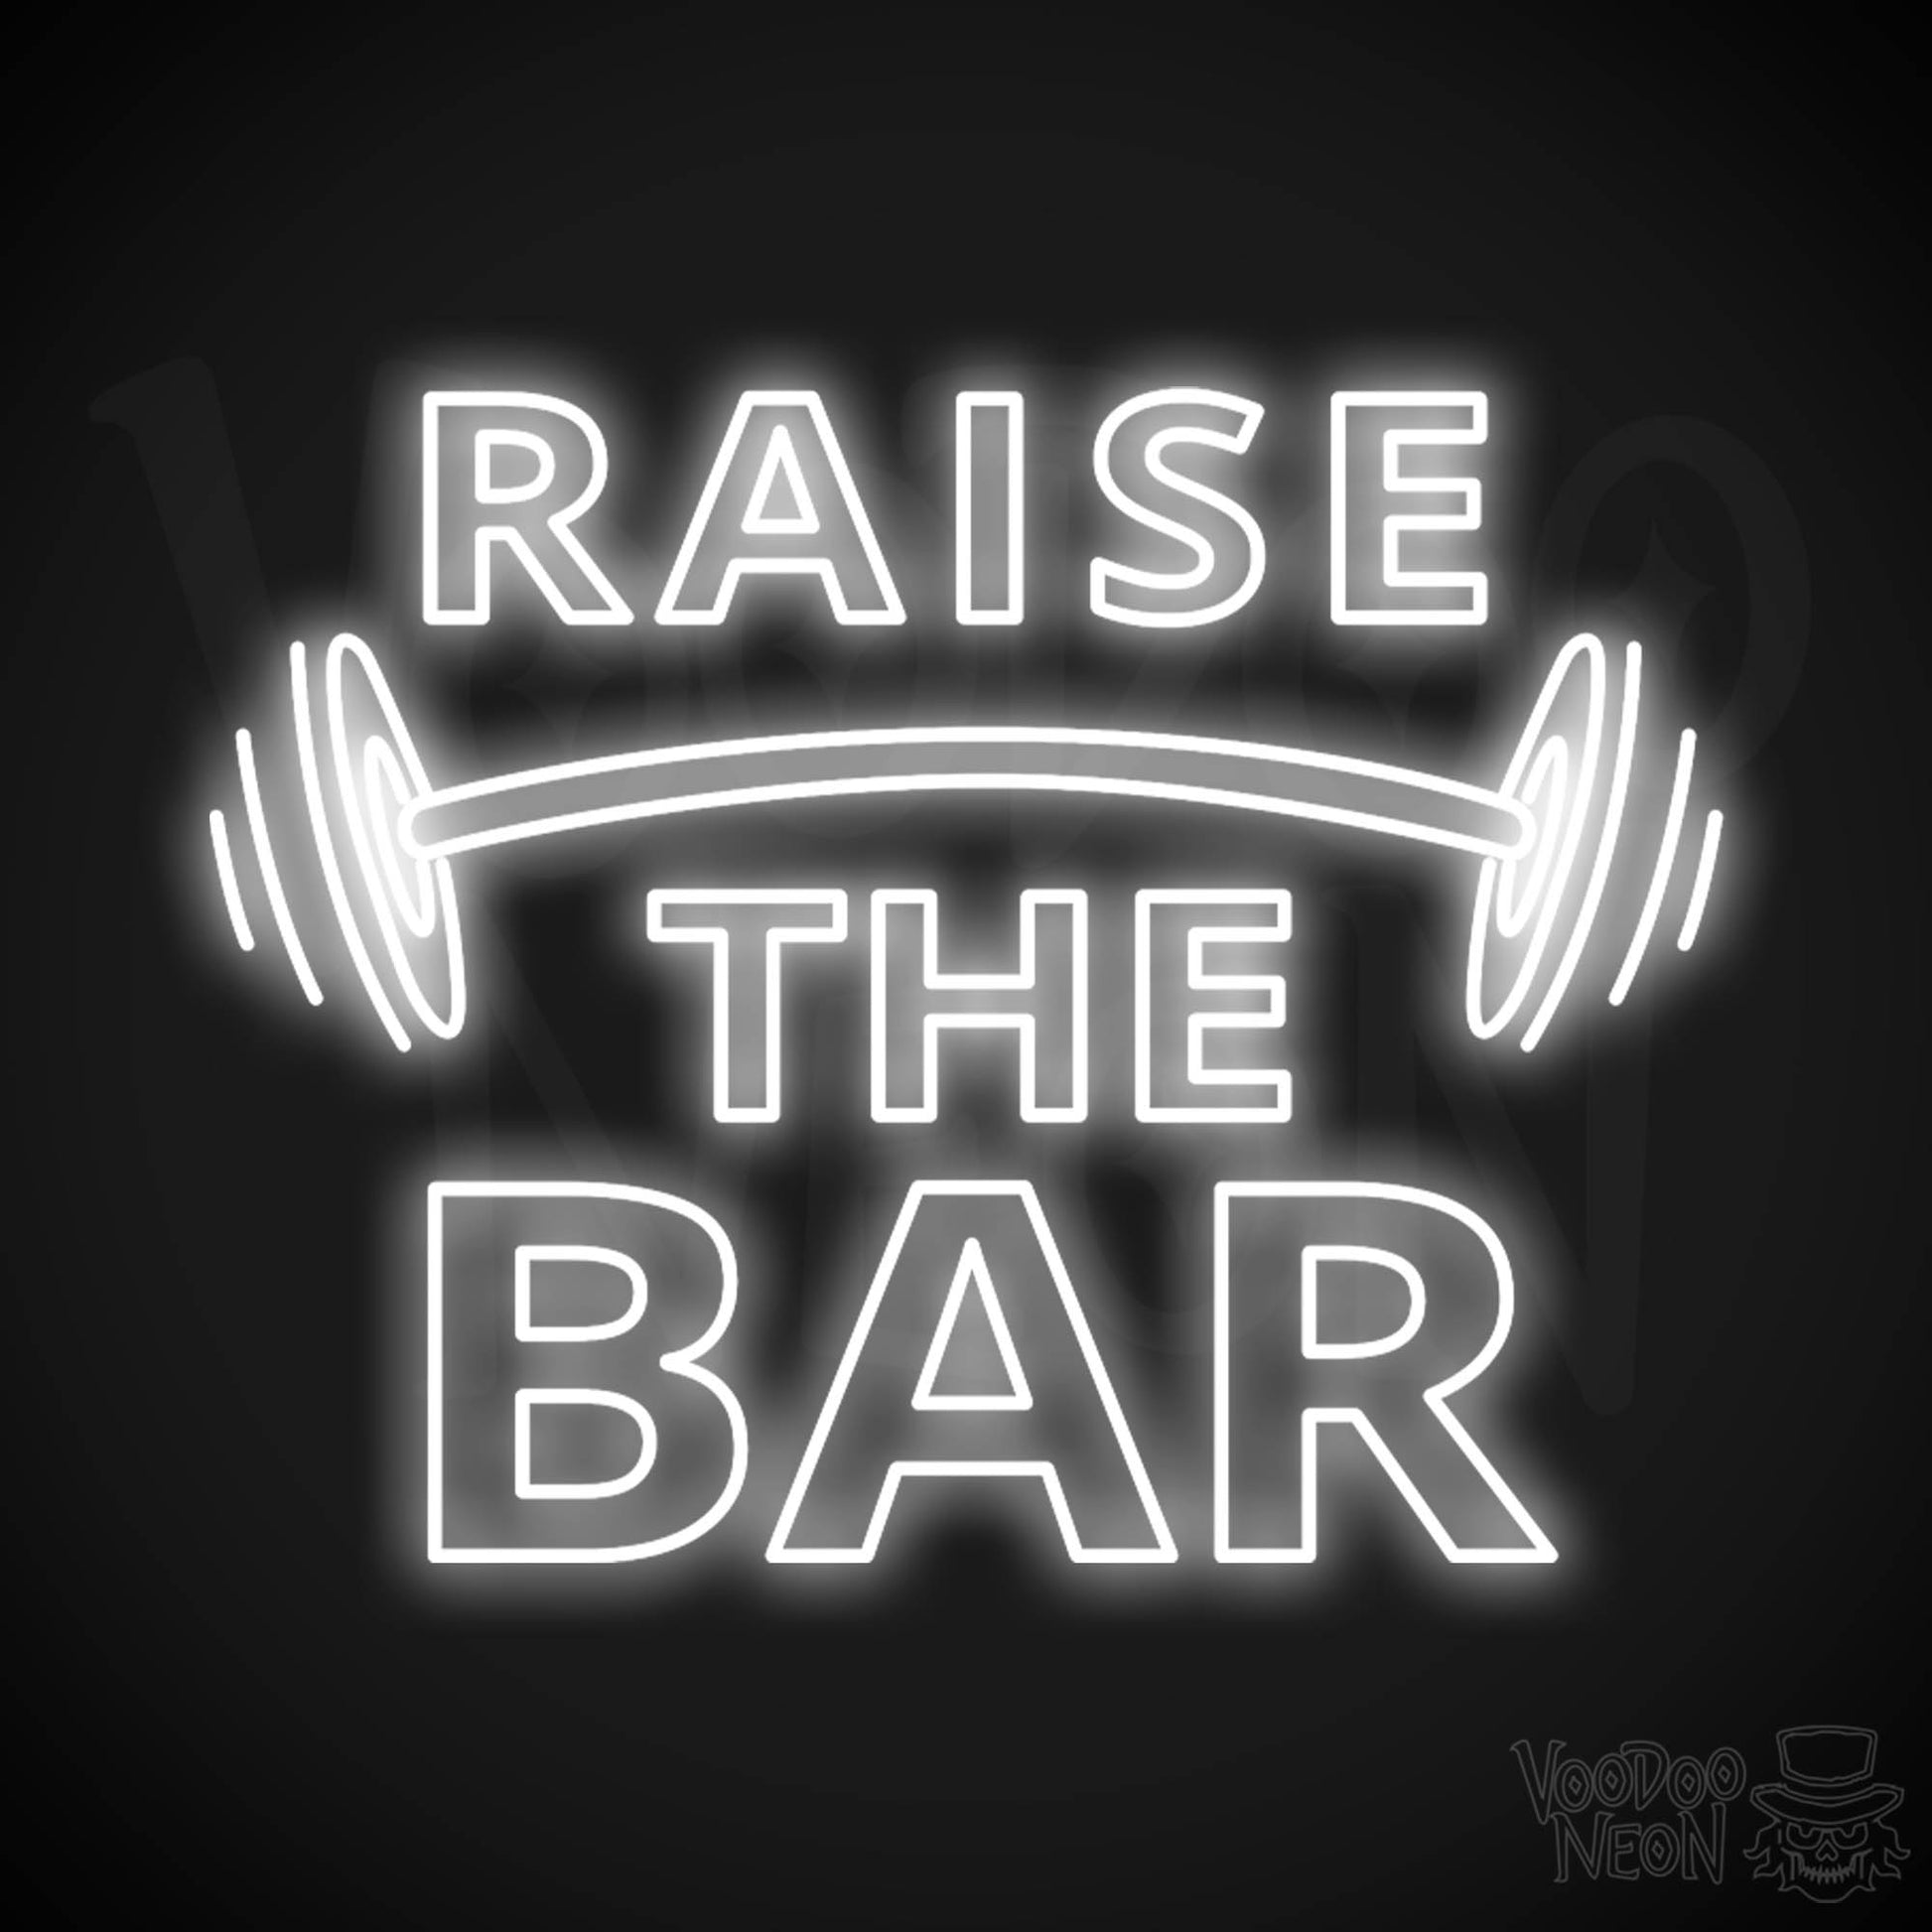 Raise The Bar LED Neon - White